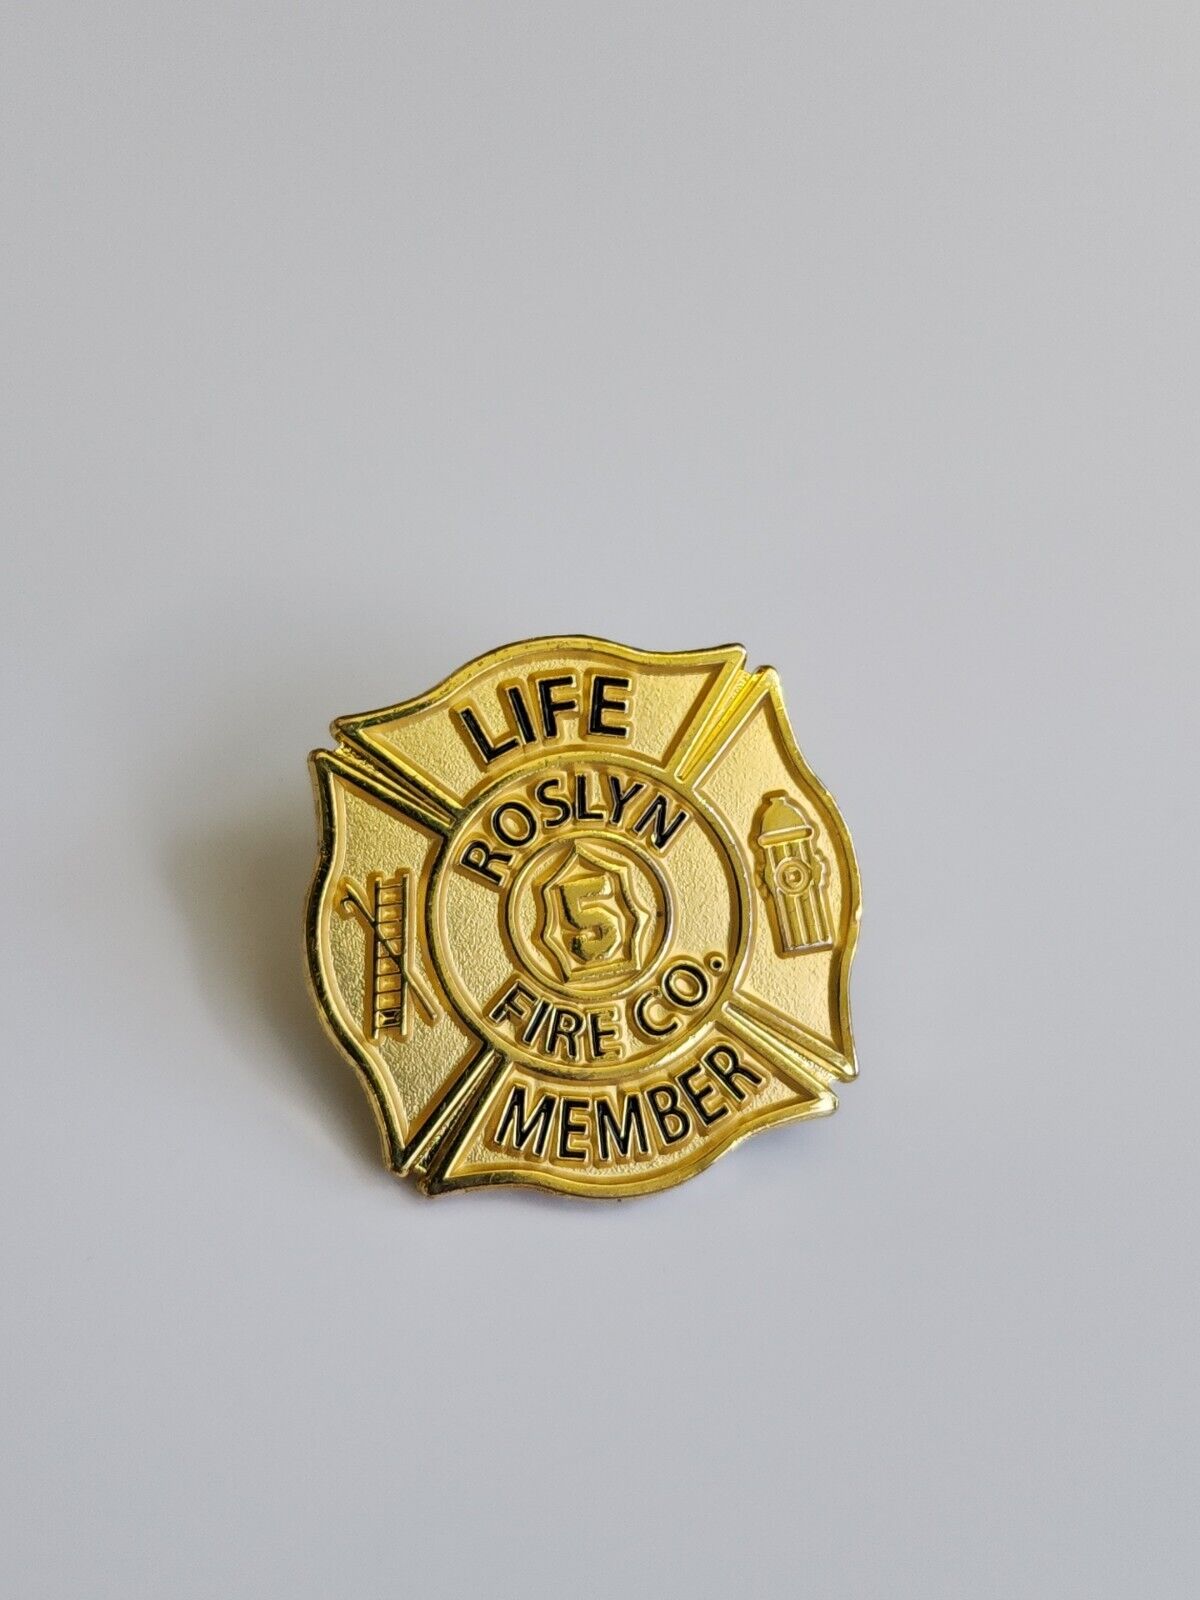 Life Member Roslyn Fire Co. Lapel Pin Gold Color Pennsylvania